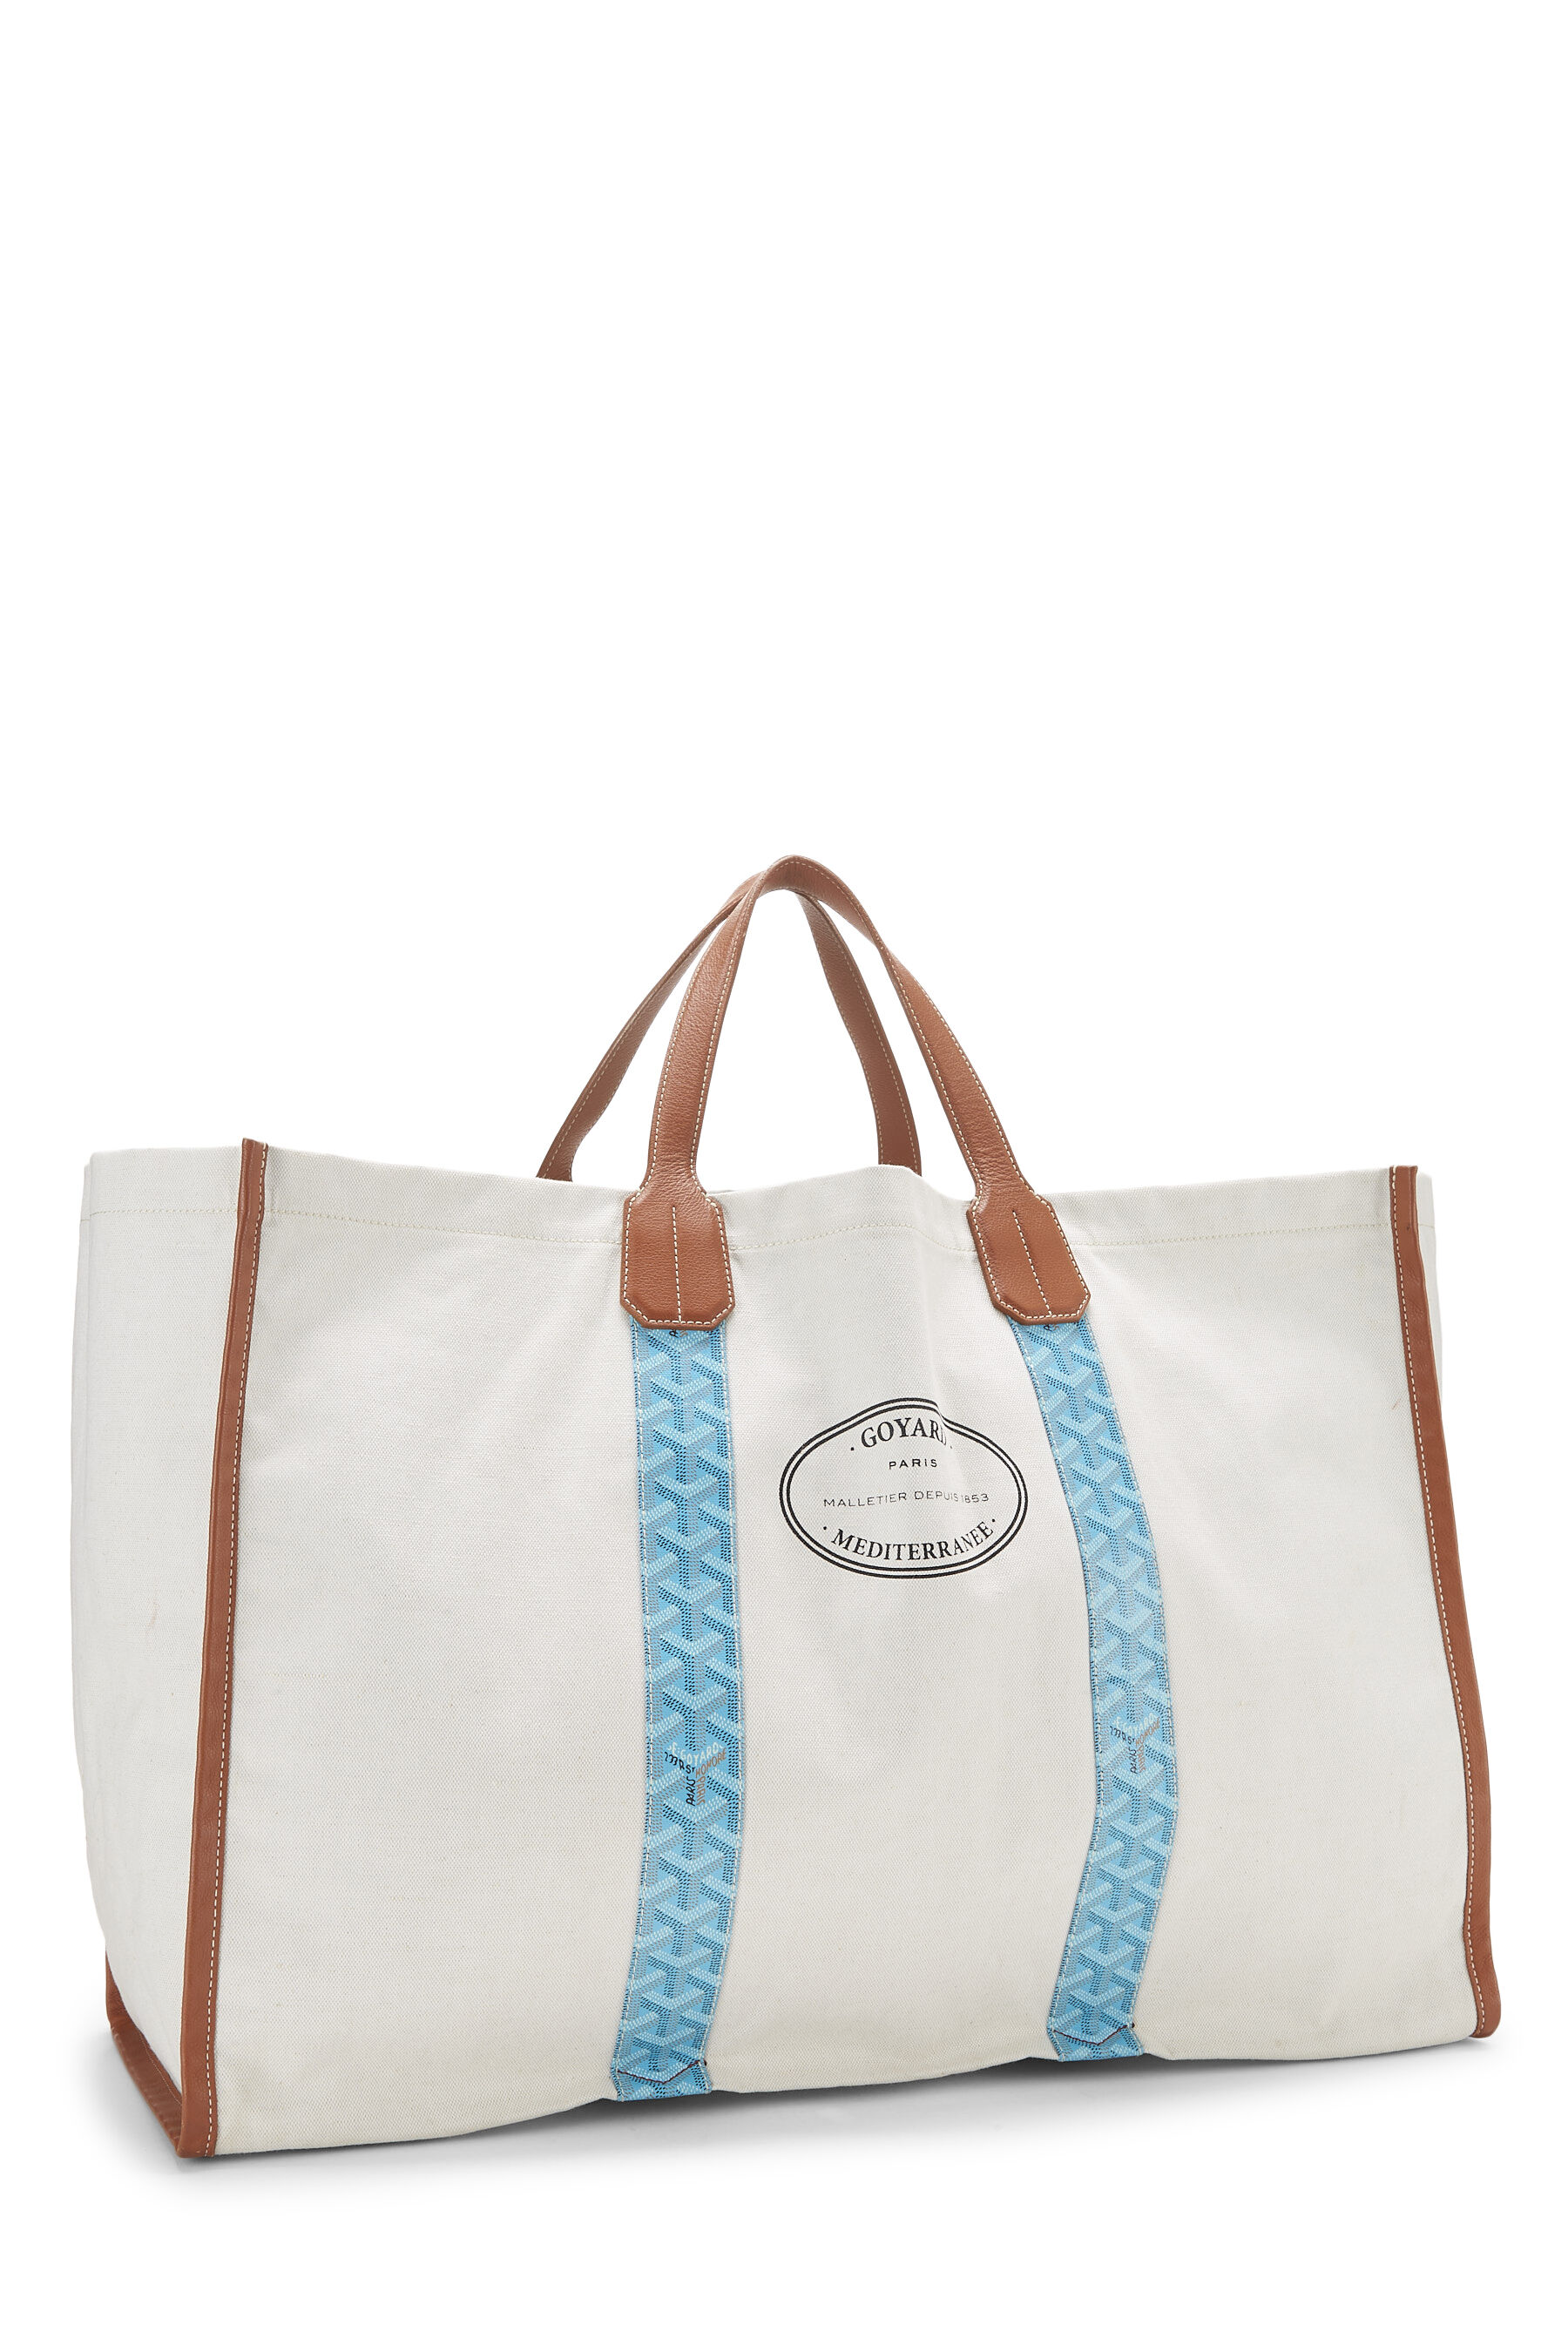 Belharra Reversible Tote Goyardine Canvas – Keeks Designer Handbags